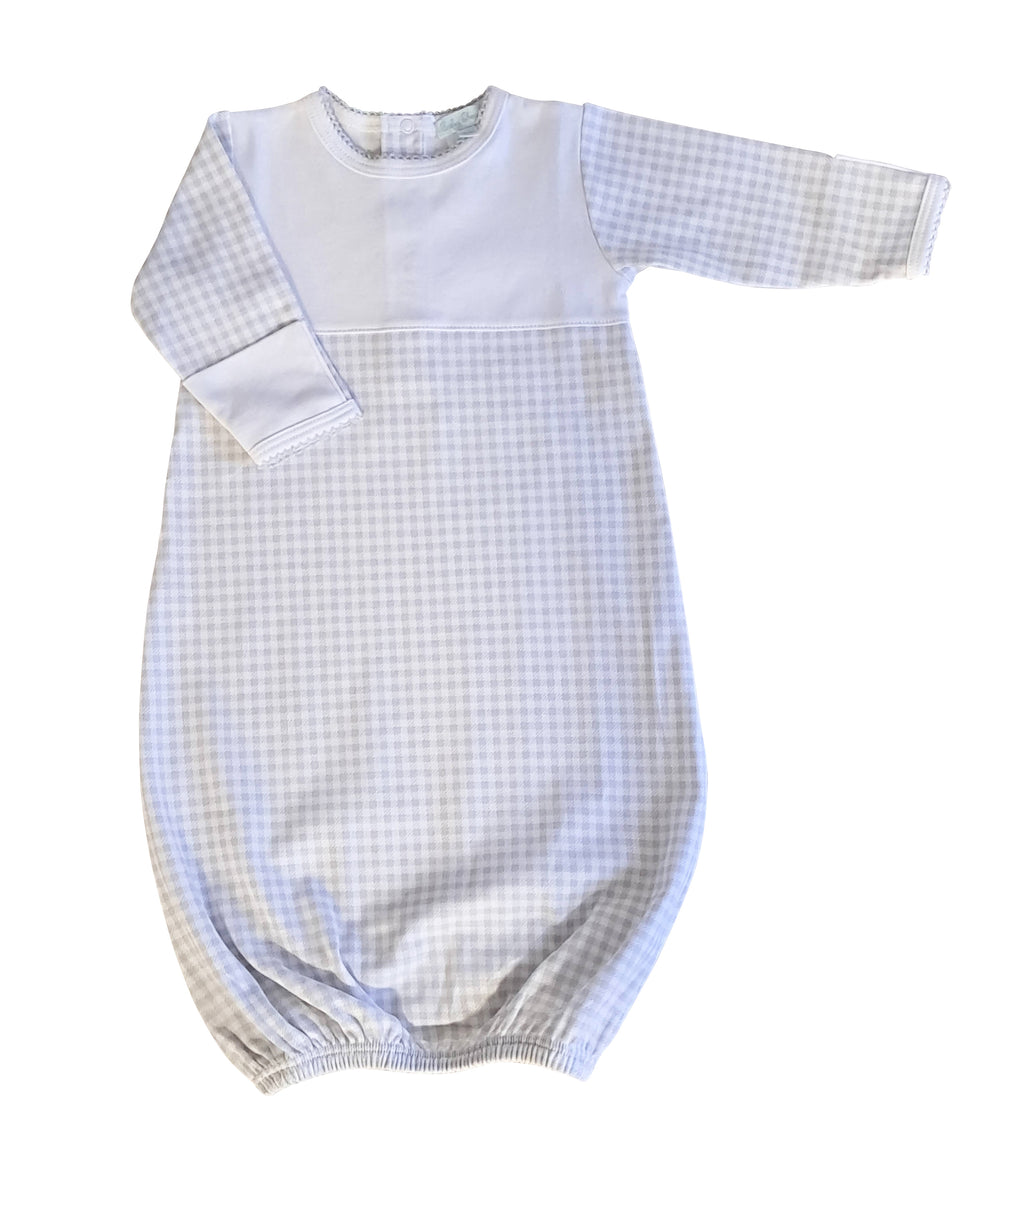 Baby's "Grey Check" Unisex Pima Cotton Gown - Little Threads Inc. Children's Clothing